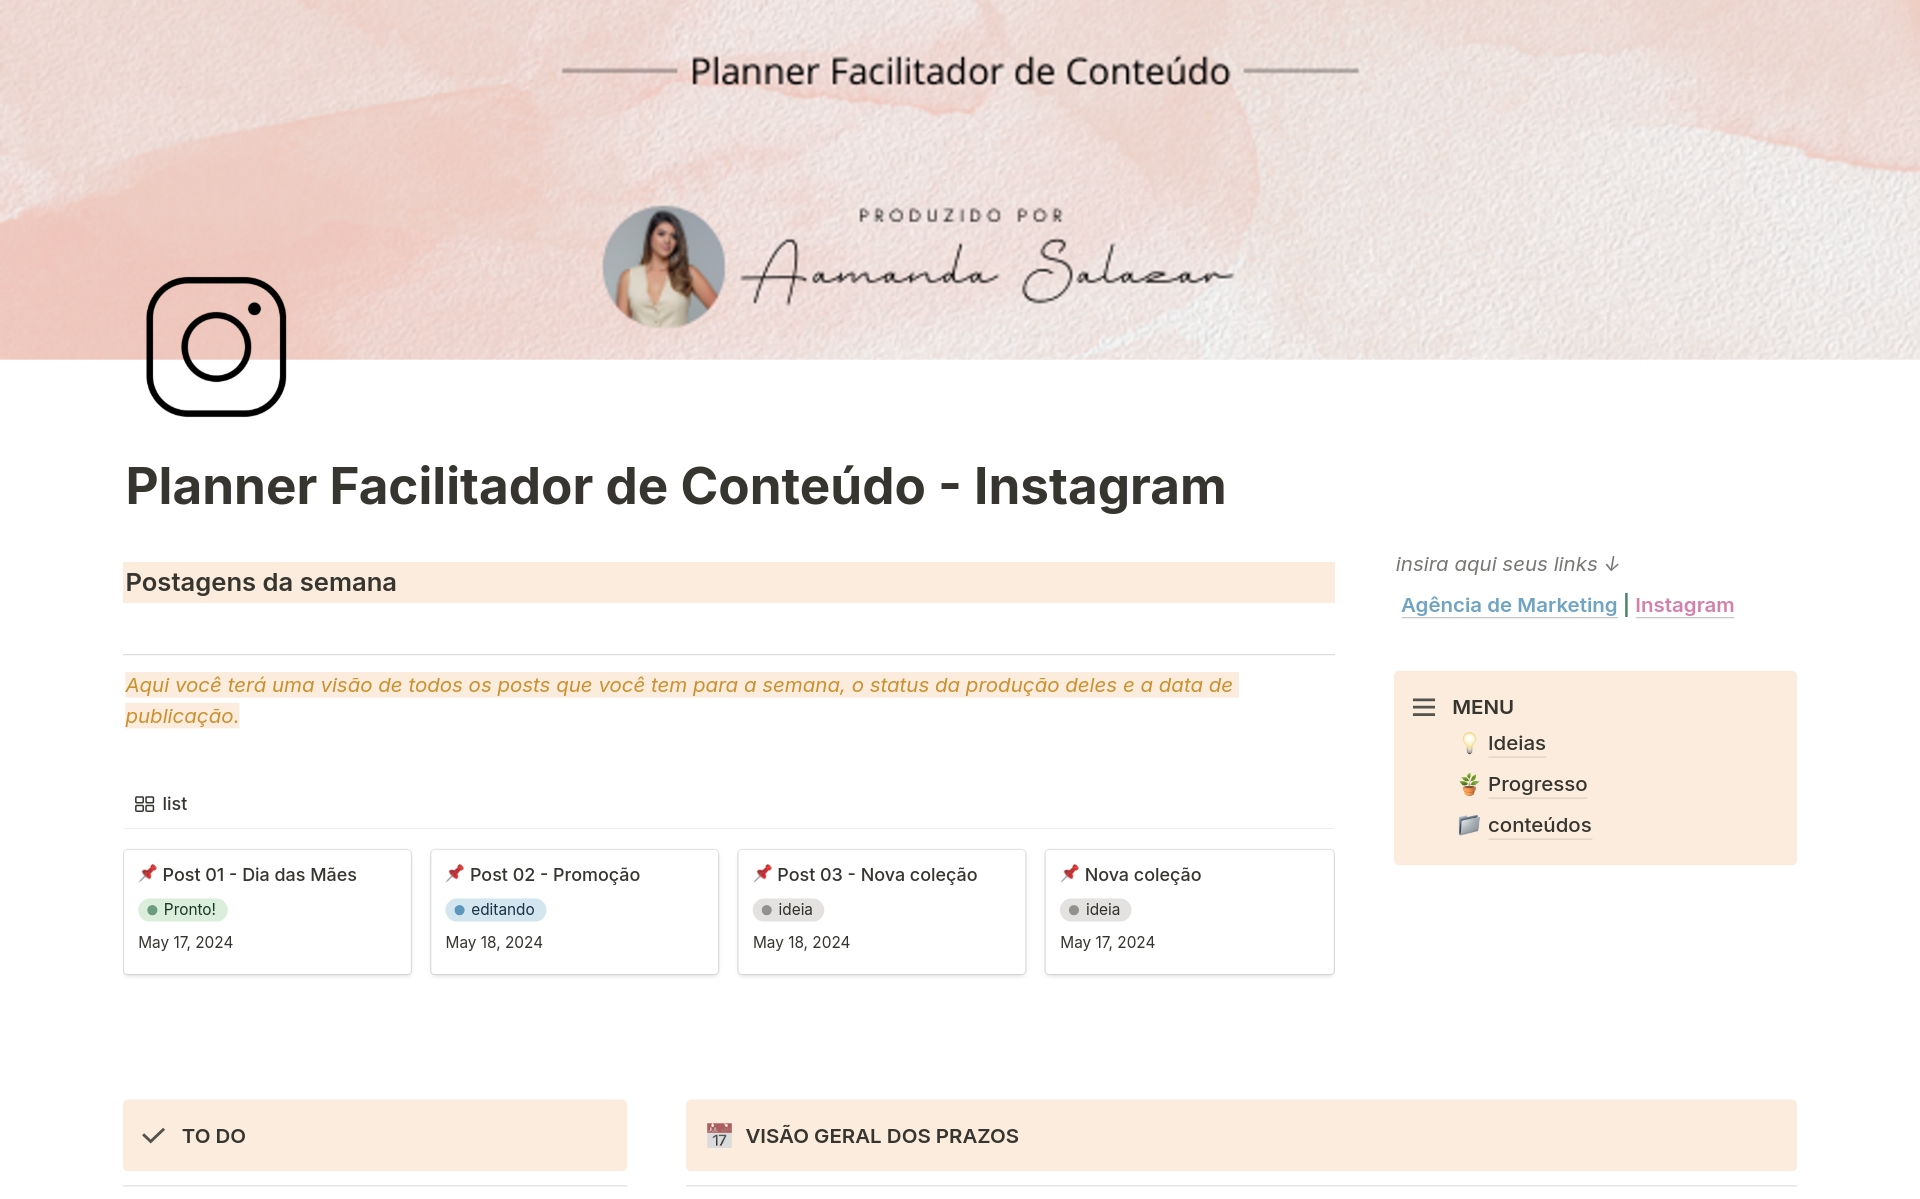 Eine Vorlagenvorschau für Planner Facilitador de Conteúdo